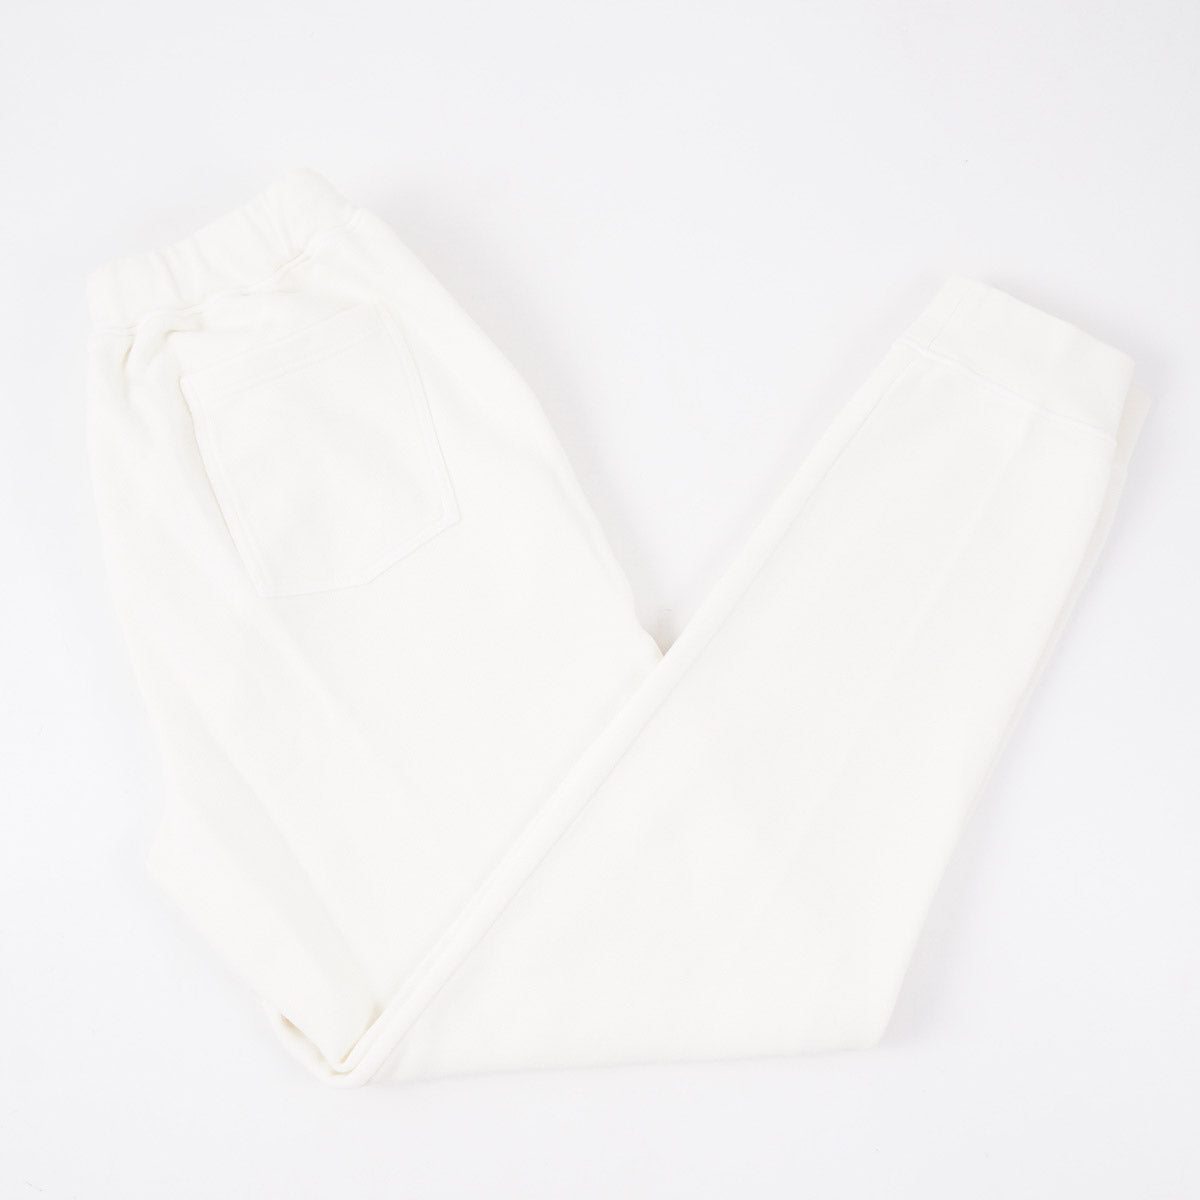 Boglioli Jersey Cotton Jogger Pants - Top Shelf Apparel